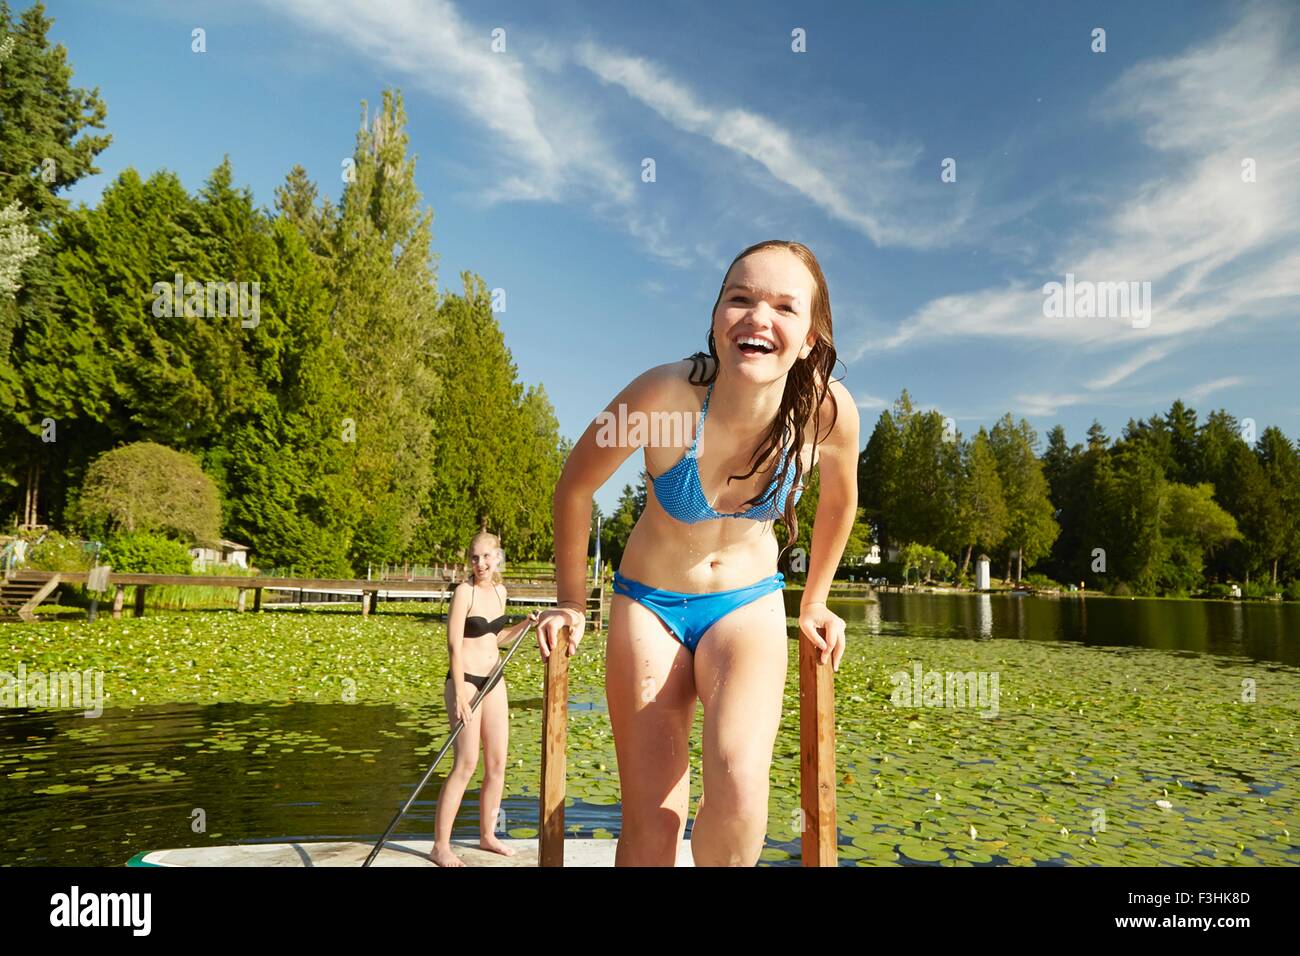 Girls in bikini having fun at lake, Seattle, Washington, USA Stock Photo